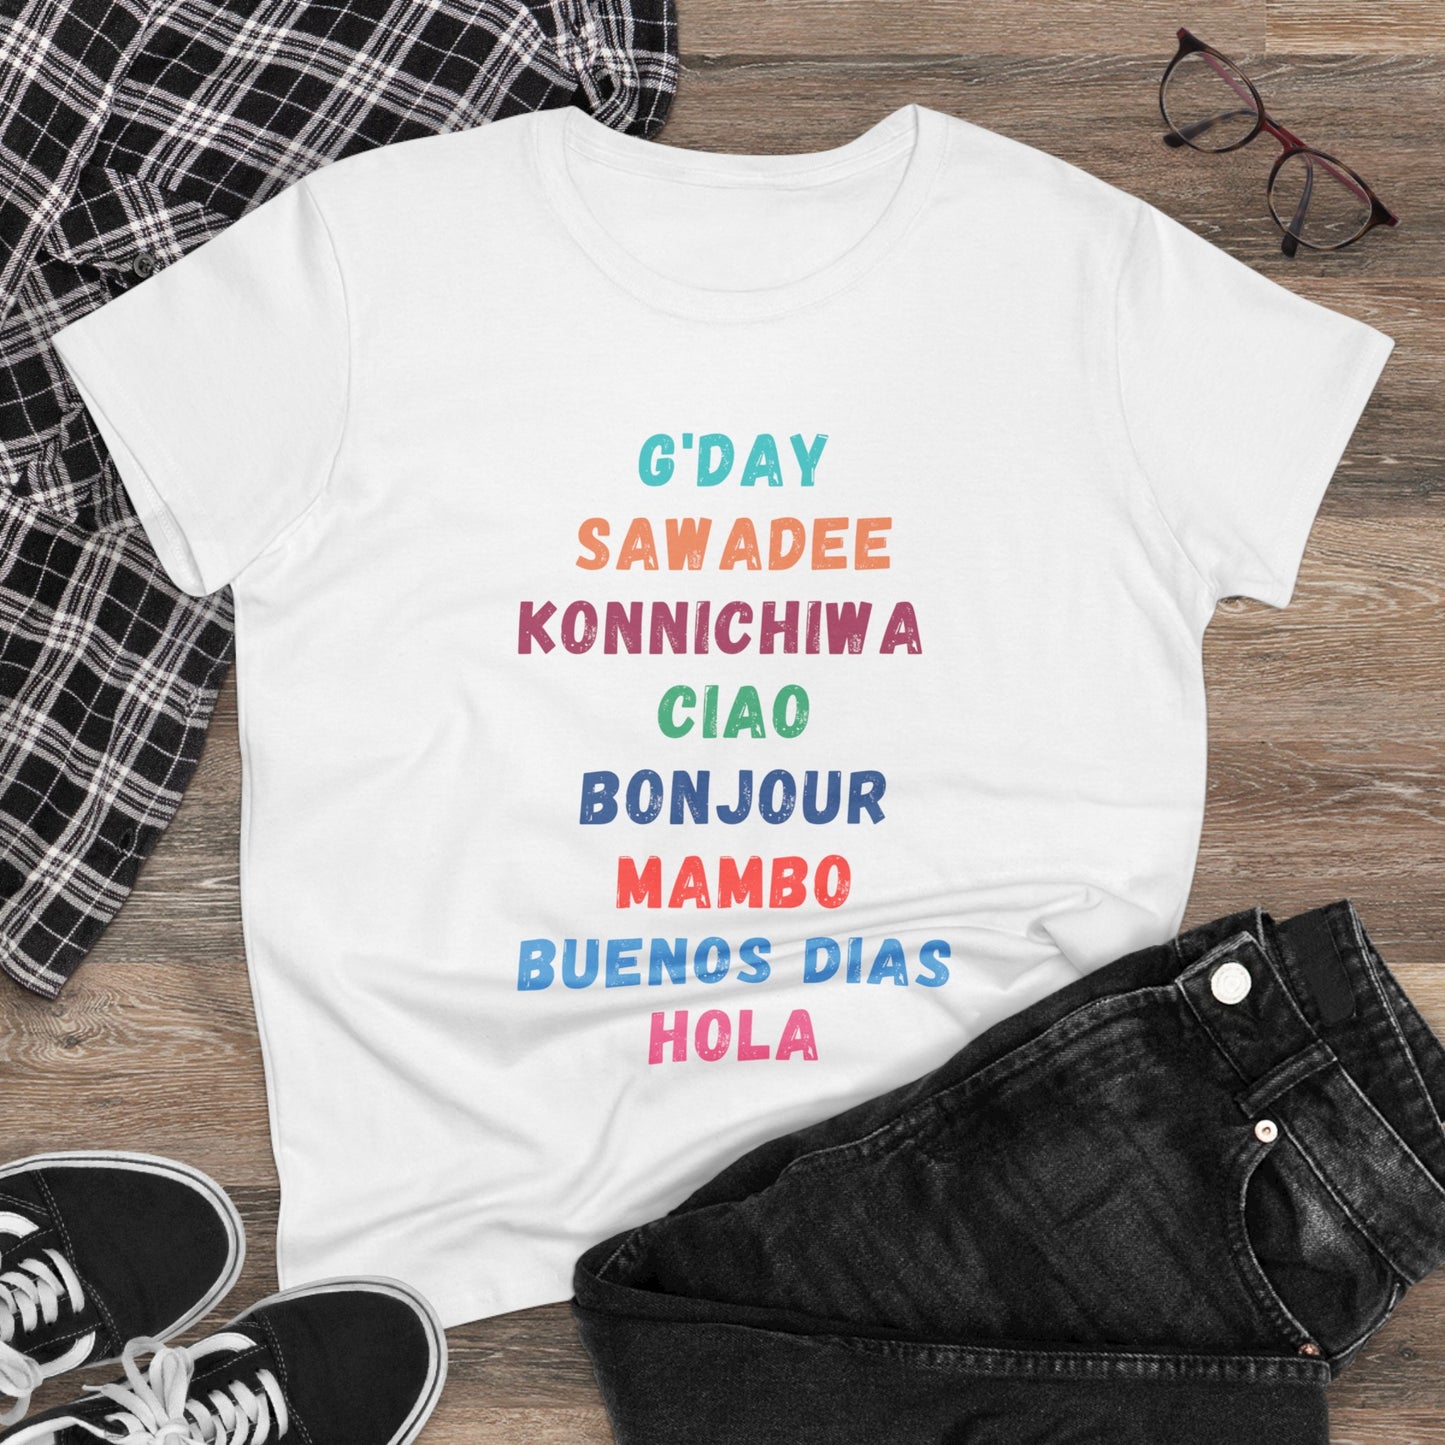 Global Greetings Women's T-shirt